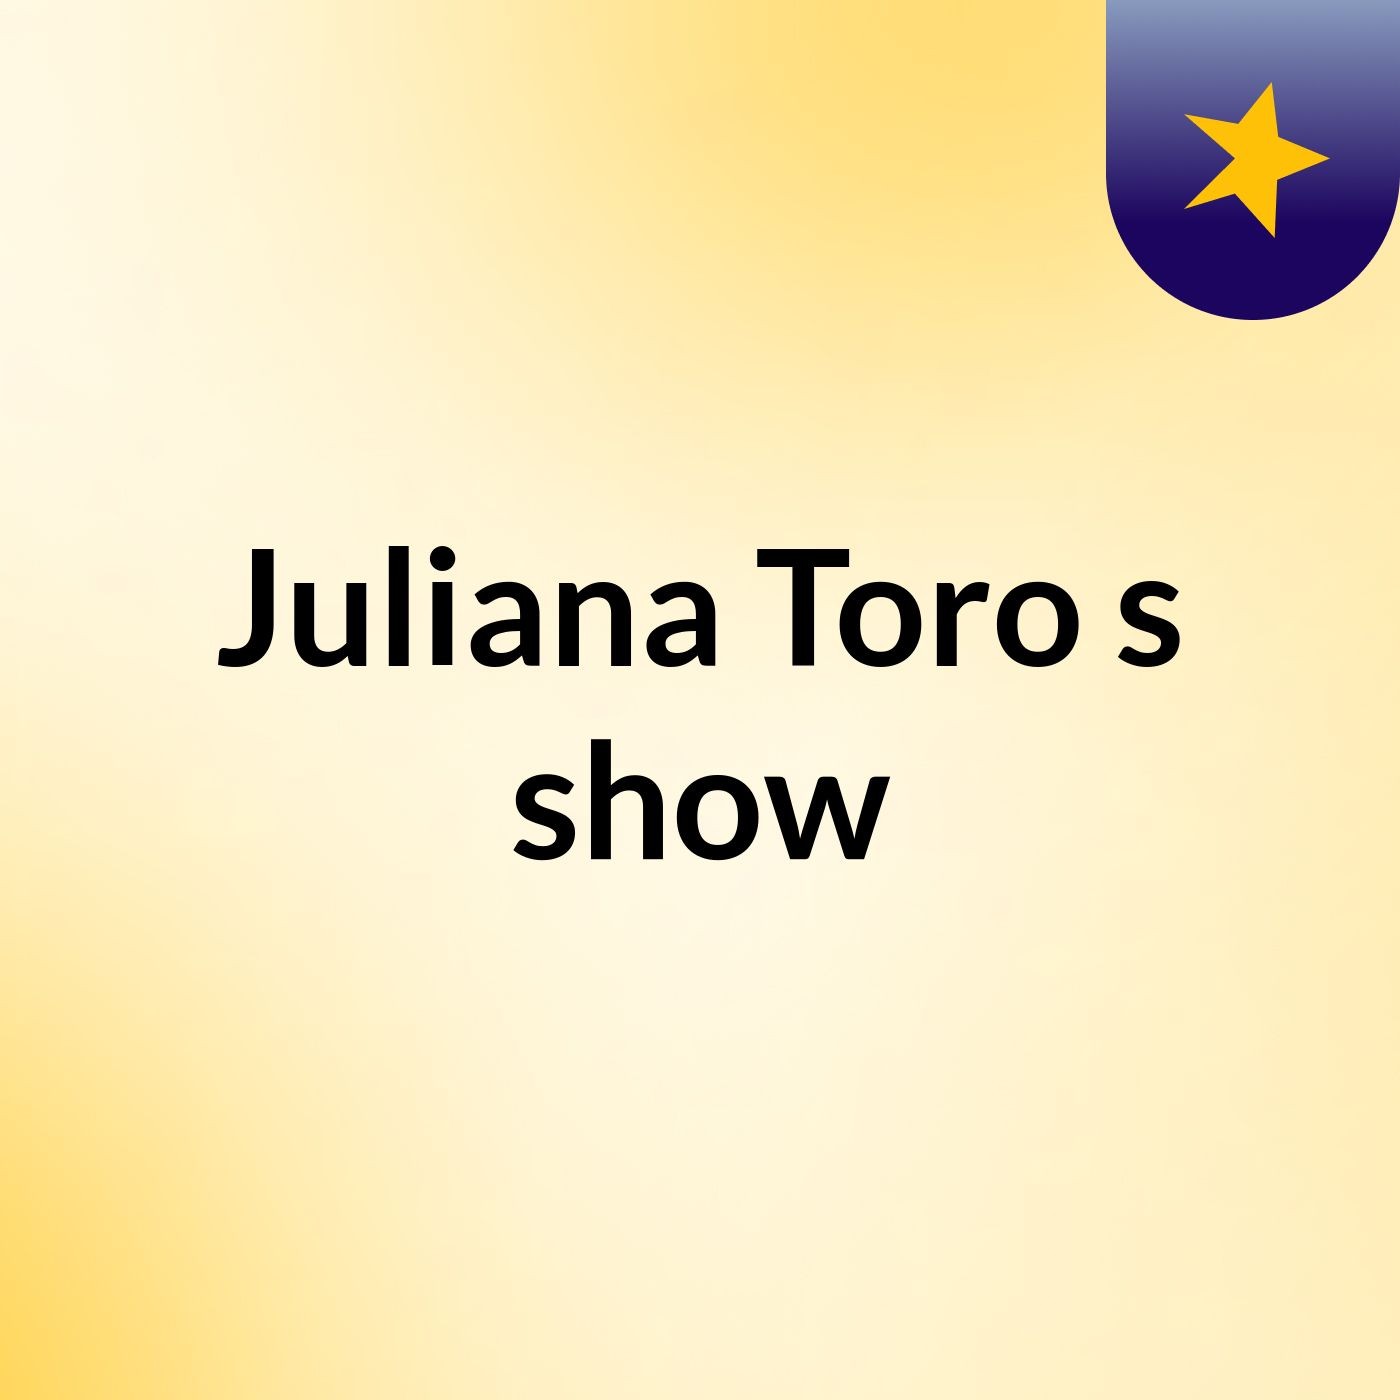 Juliana Toro's show